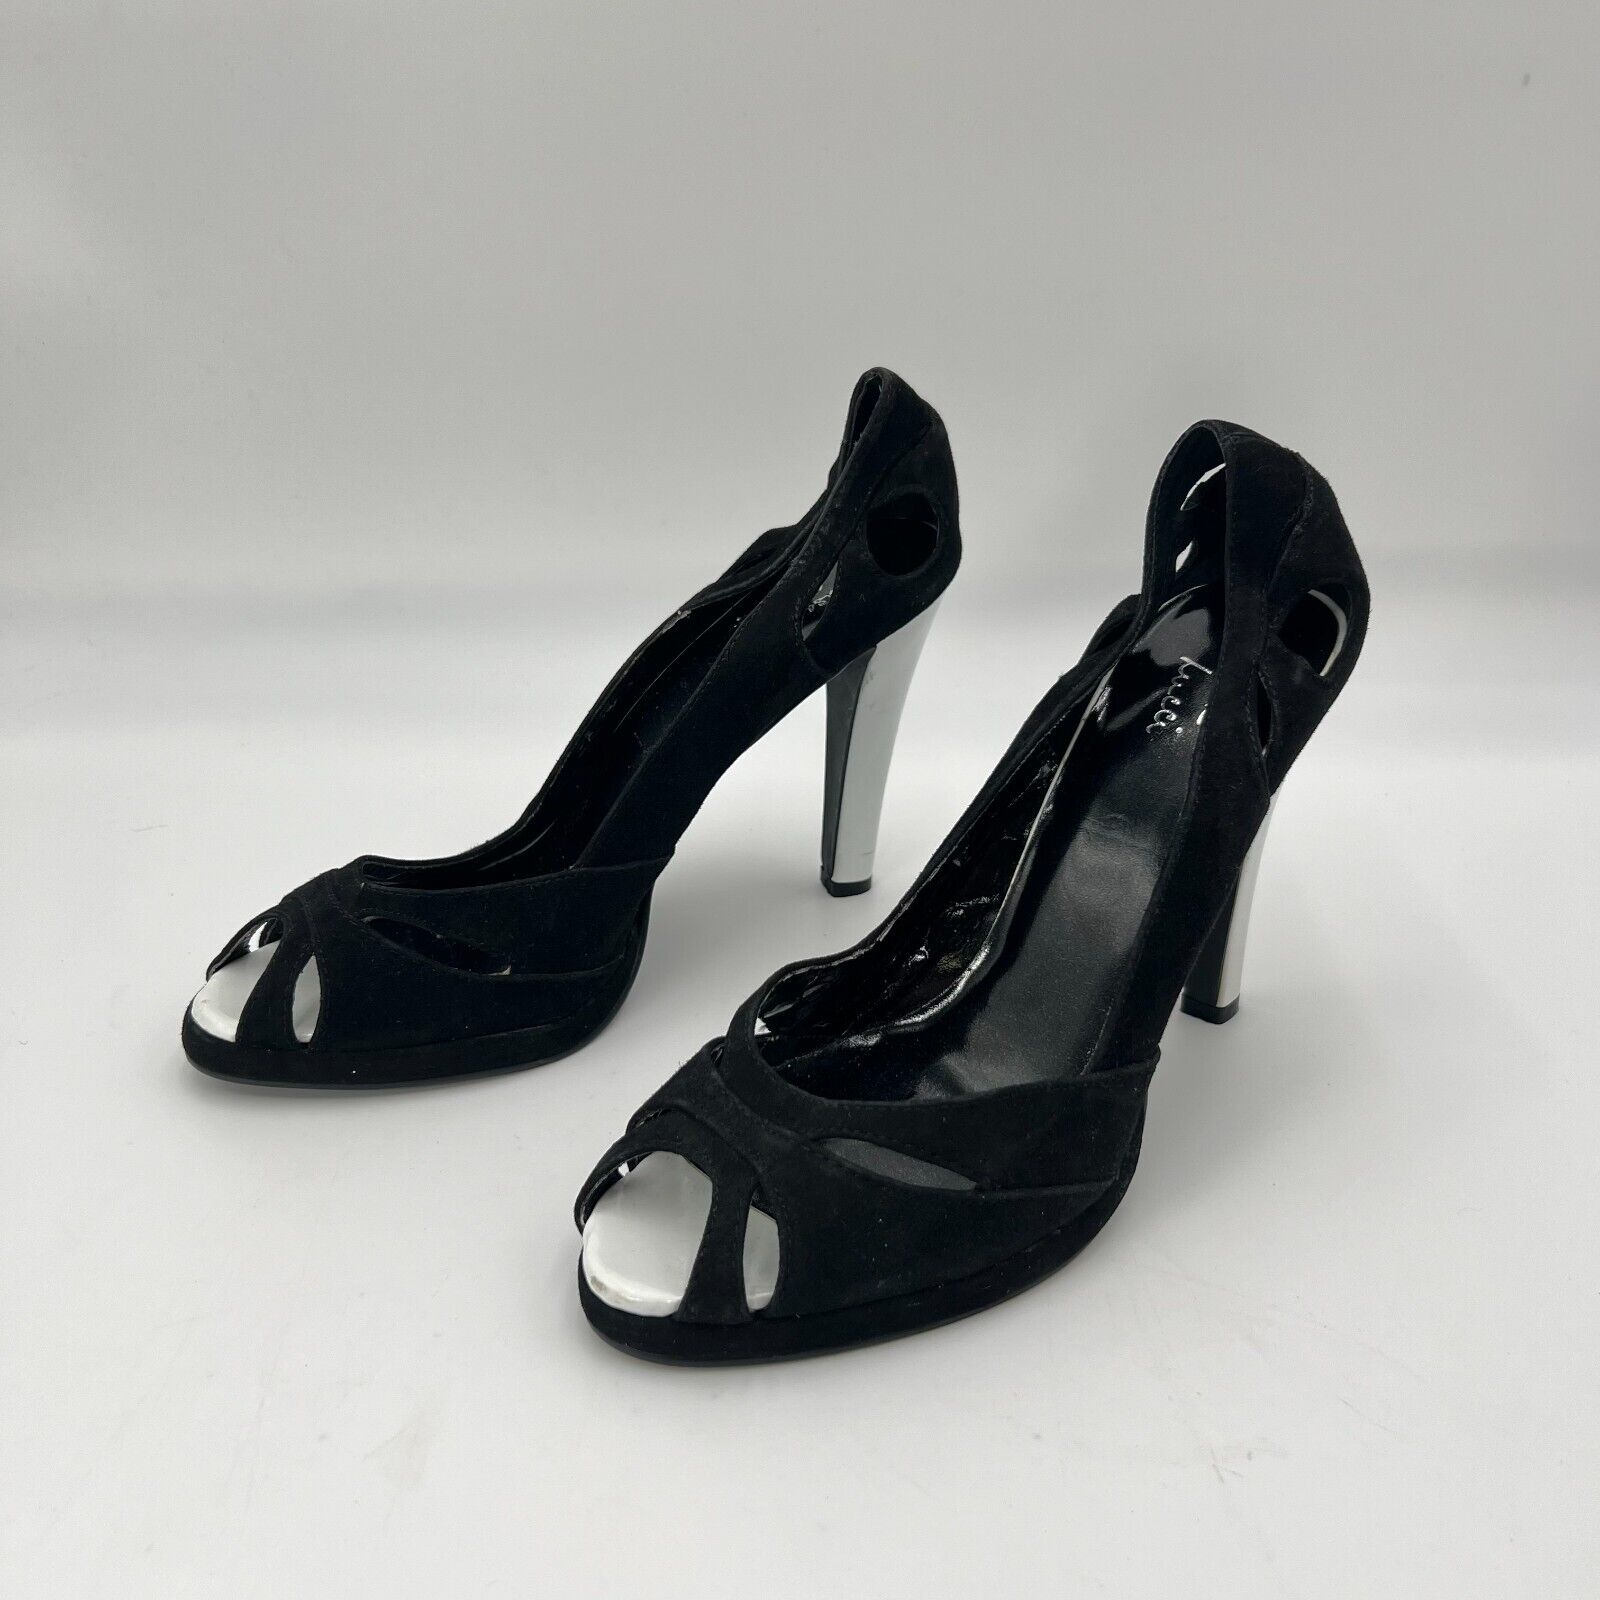 Susan Lucci Designer Pumps 4.5 inch Heel Black Leather Open Toe Womens Size 10M